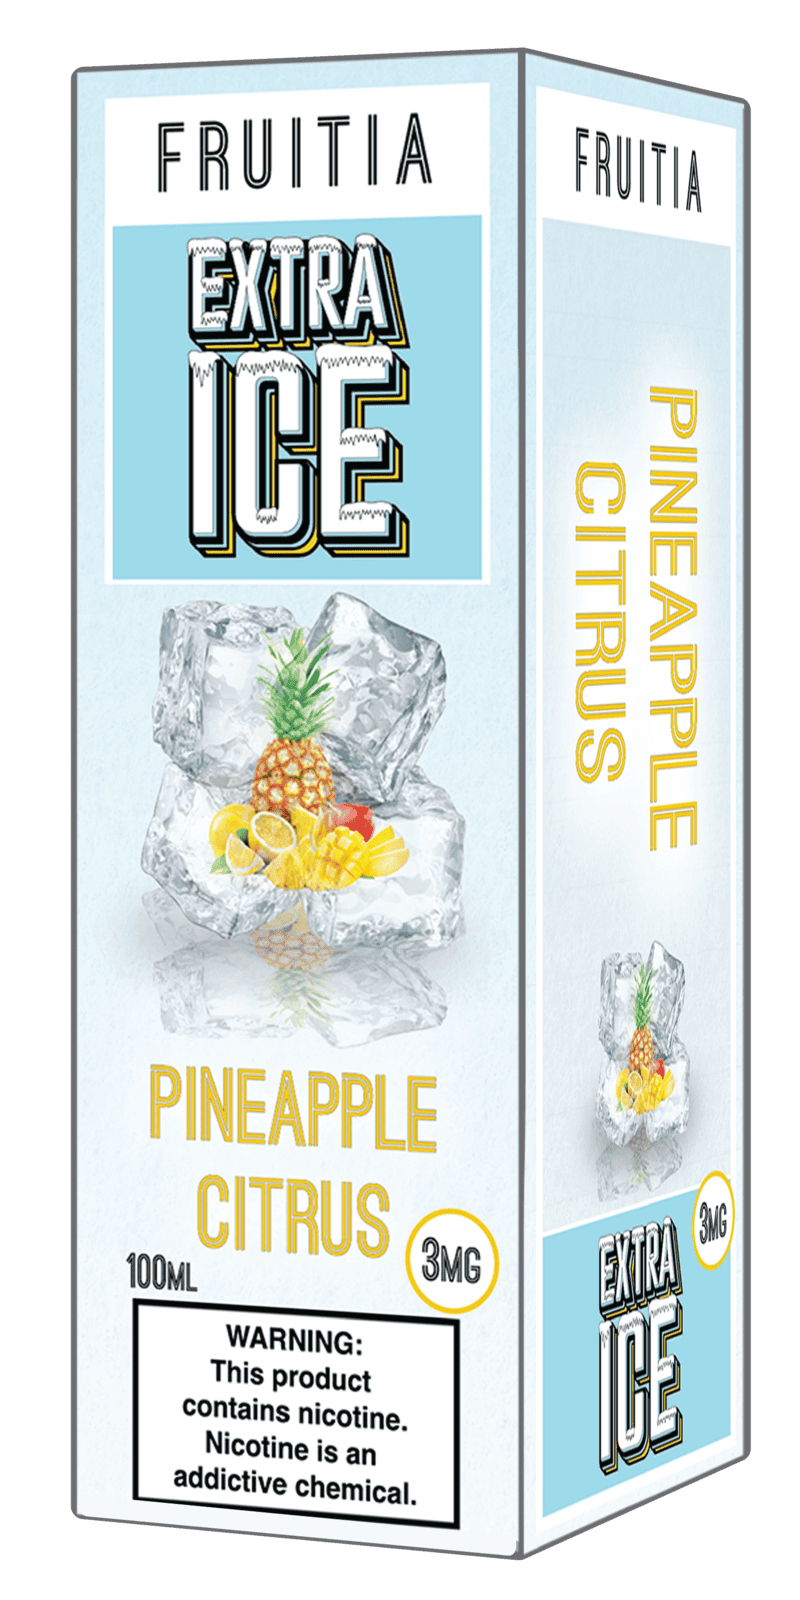 Fruitia Extra ICE 100mL [DROPSHIP] [CA]